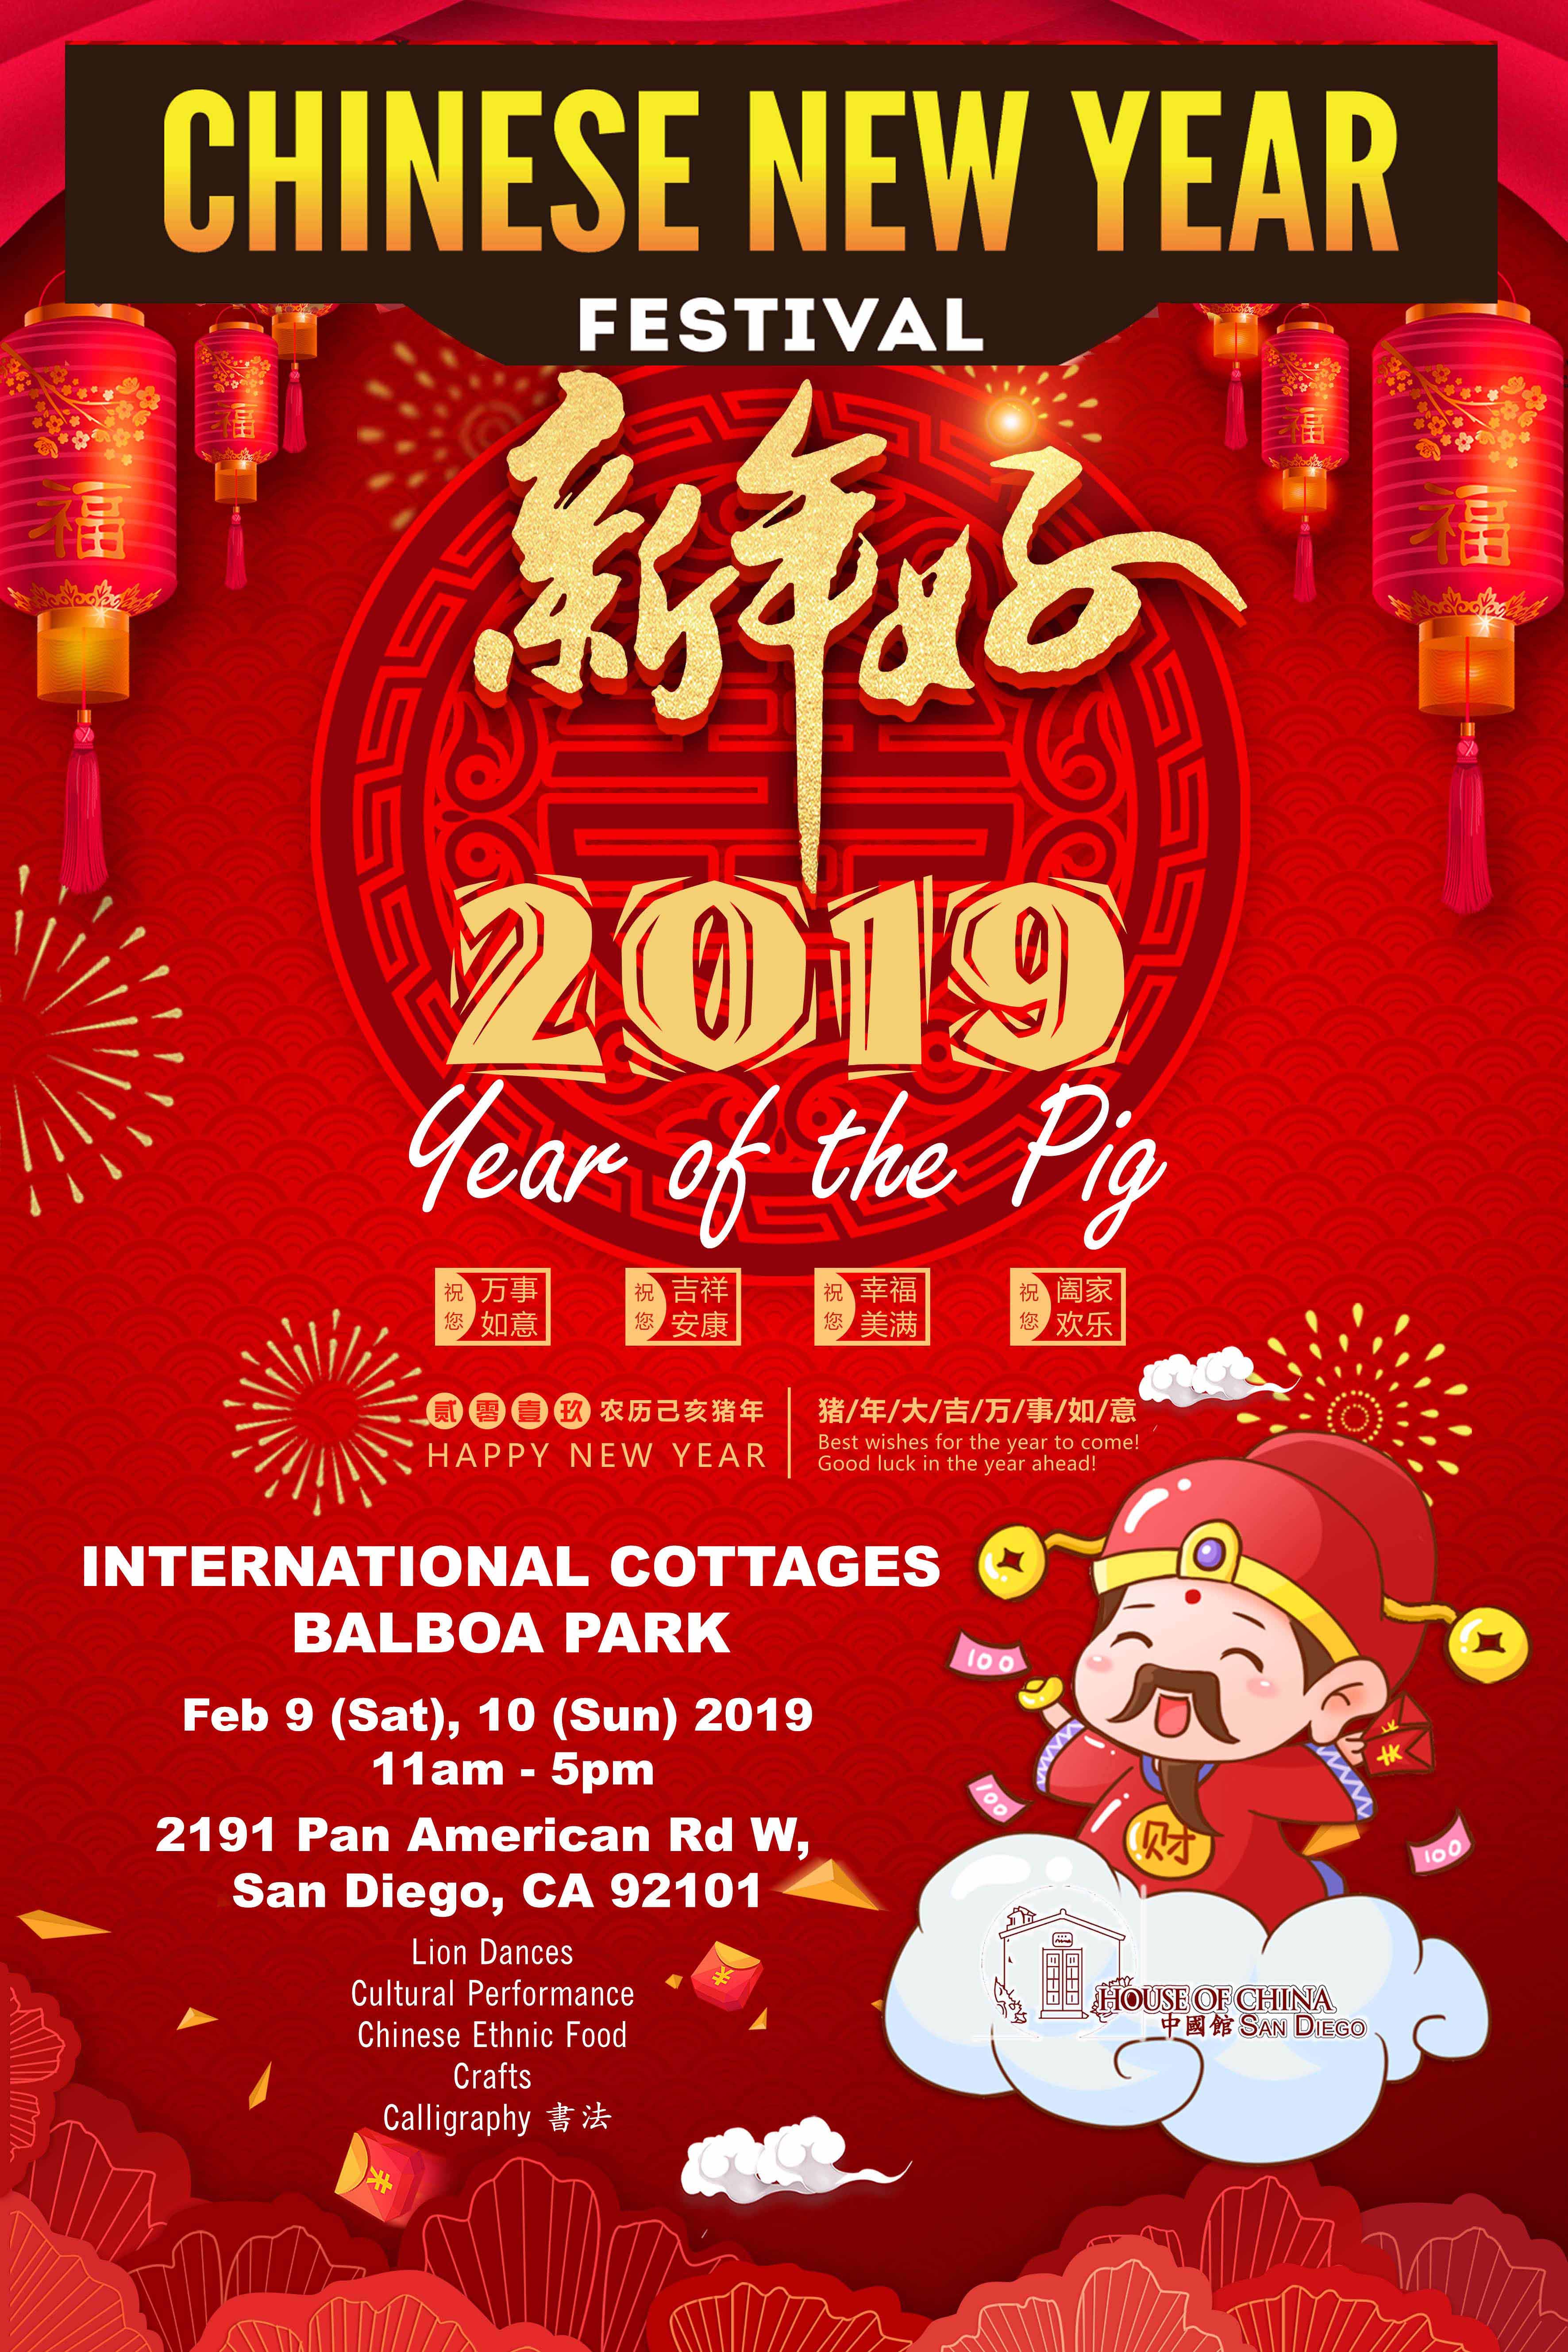 Chinese New Year Festival at Balboa Park Tickets, Sat, Feb 9, 2019 at 11:00 AM ...3543 x 5315